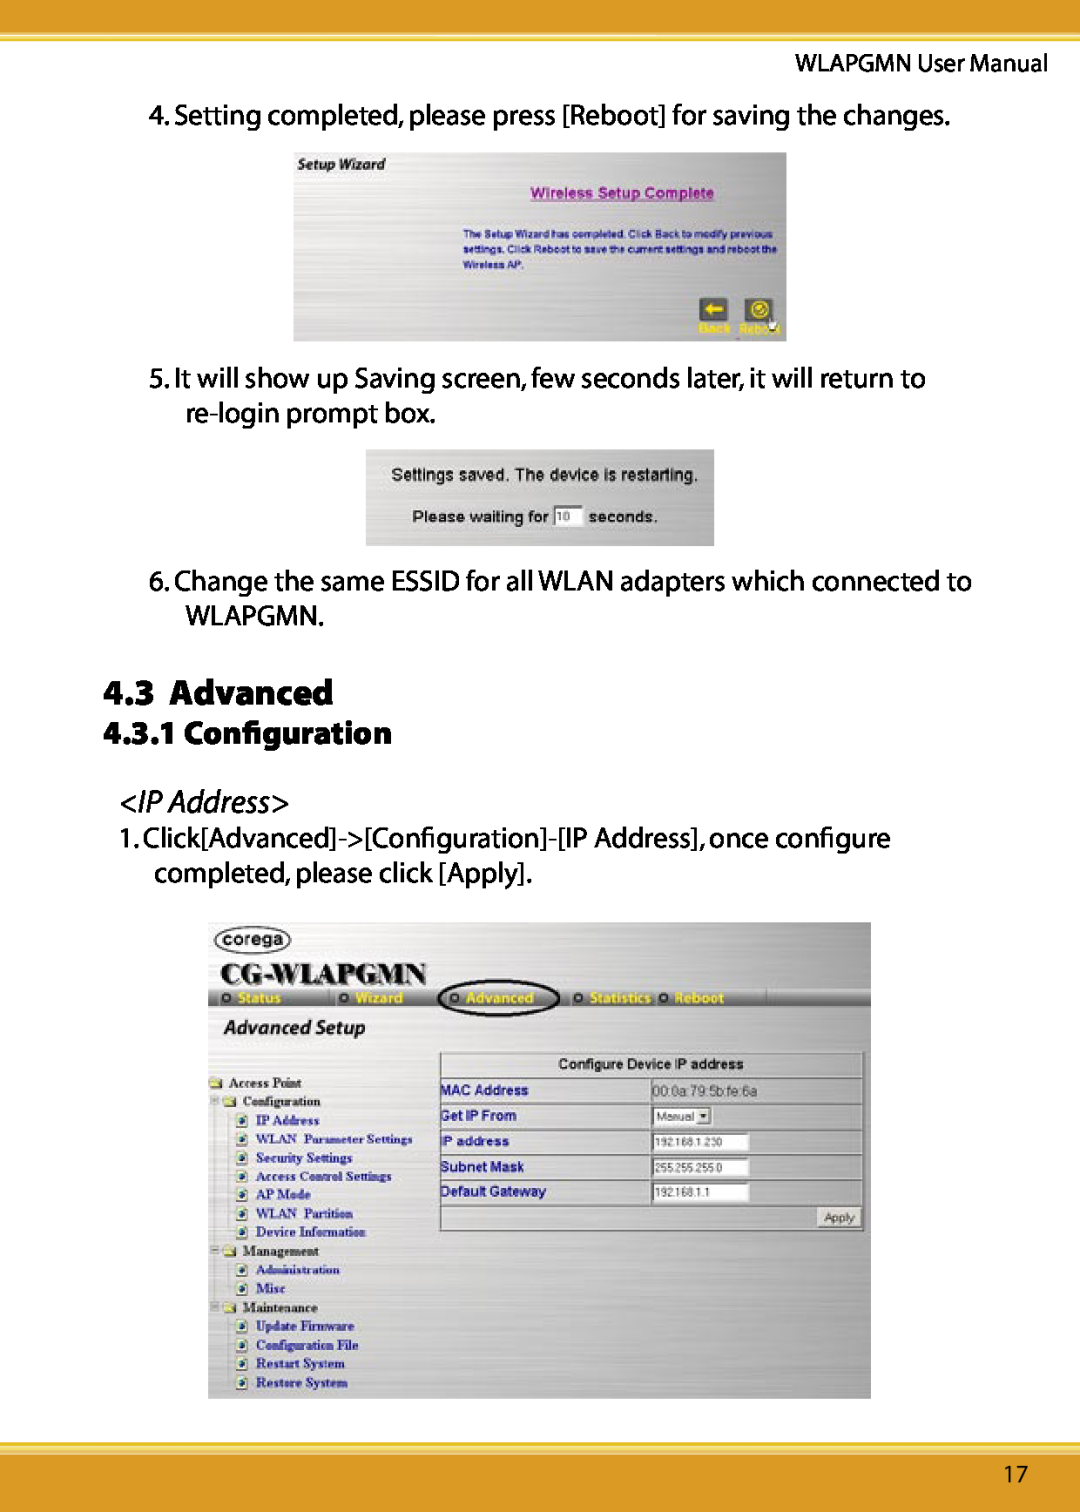 Corega CG-WLAPGMN user manual Advanced, 4.3.1 Conﬁguration, IP Address 